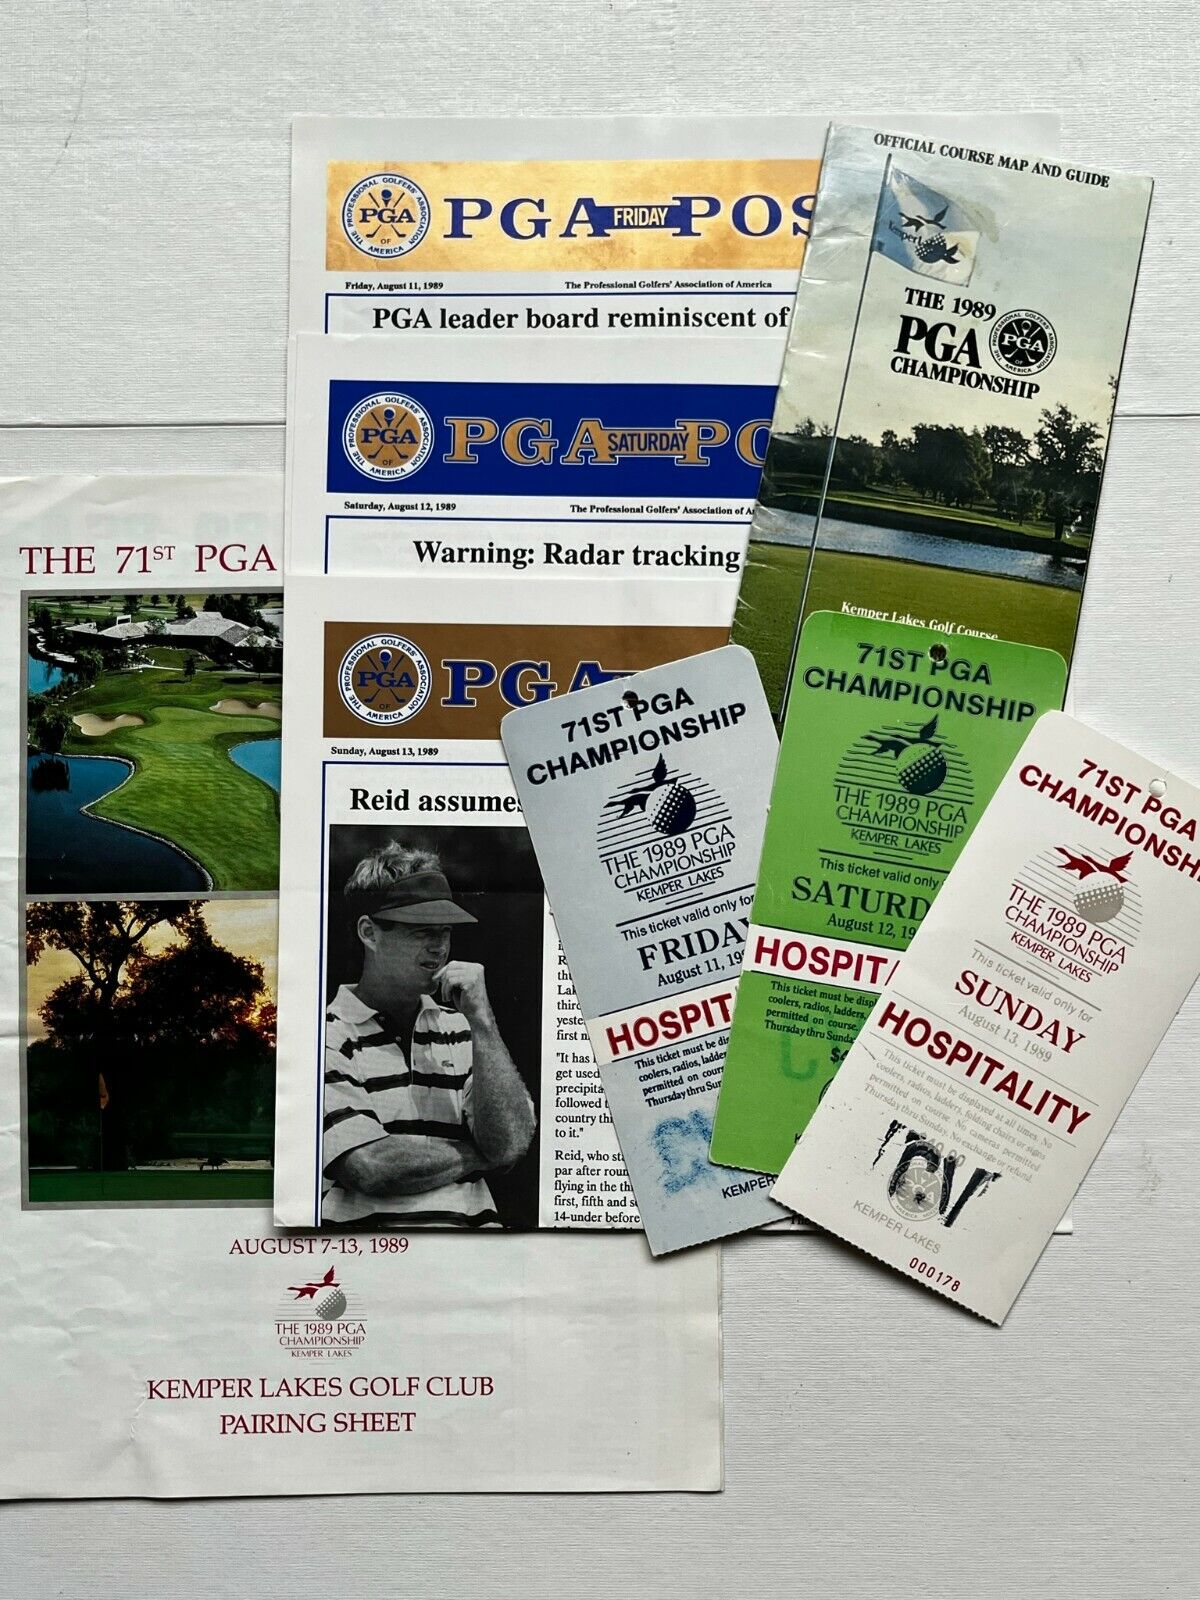 1989 PGA CHAMPIONSHIP 3 TICKETS+ KEMPER LAKES GUIDE/MAP+ 5Extras - PAYNE STEWART PGA